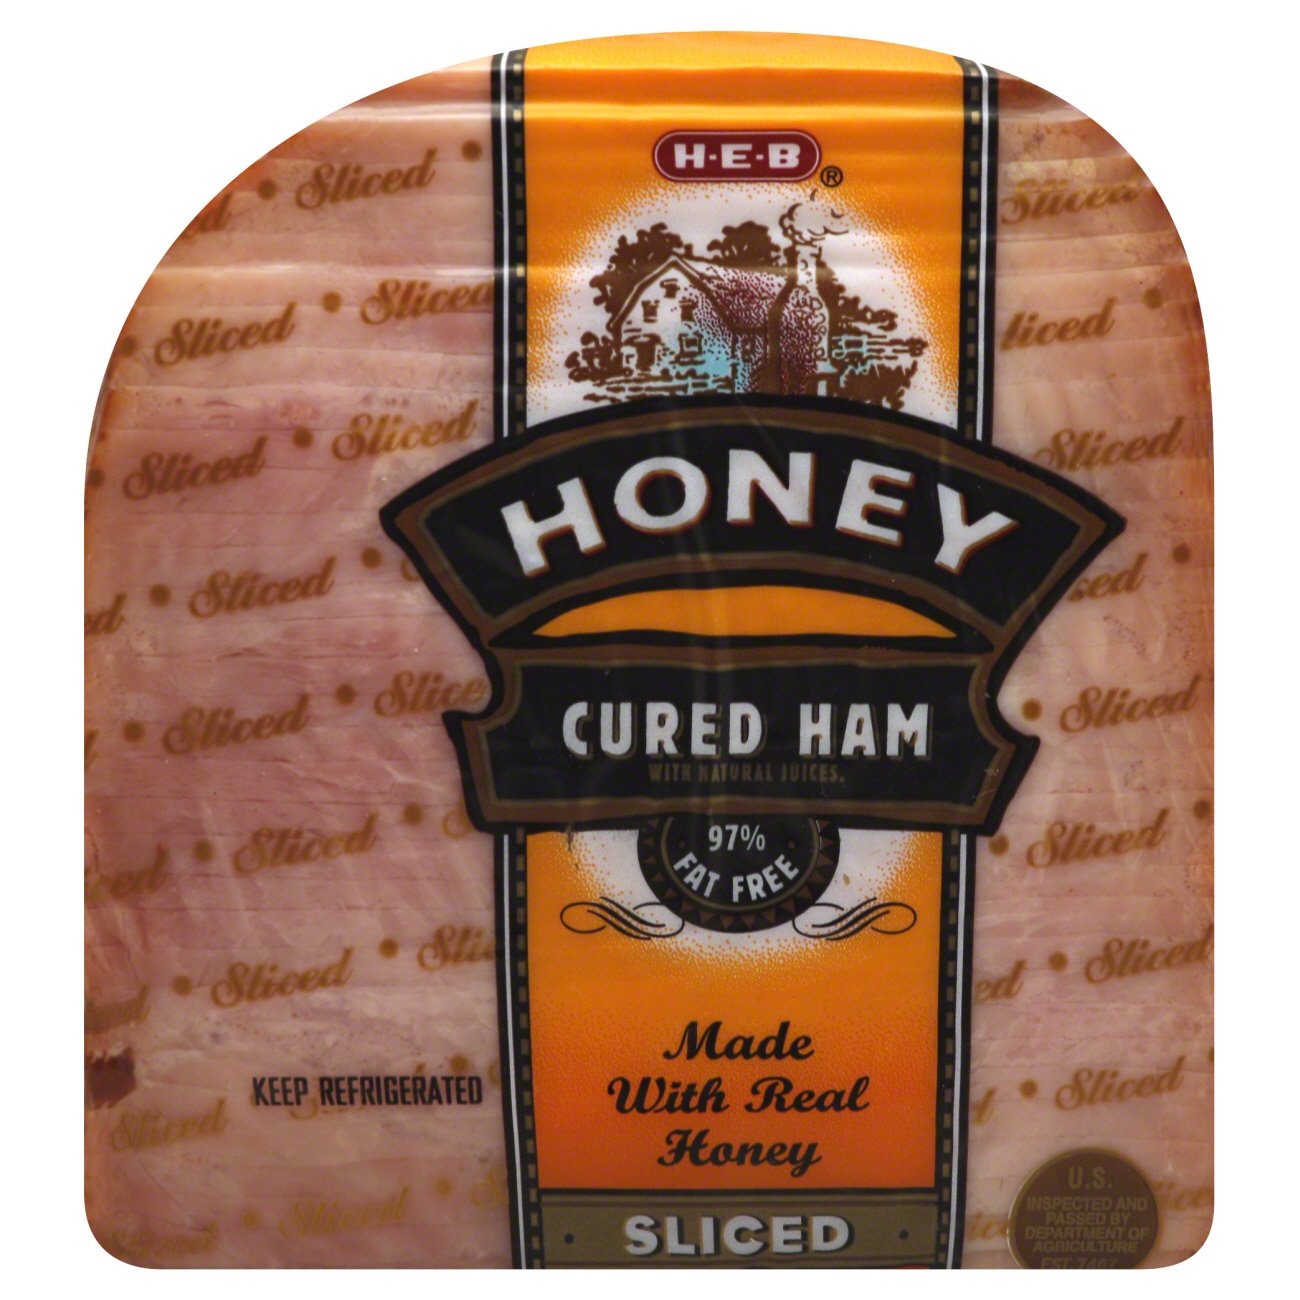 H-E-B Boneless Sliced Honey Cured Ham - Shop Meat at H-E-B